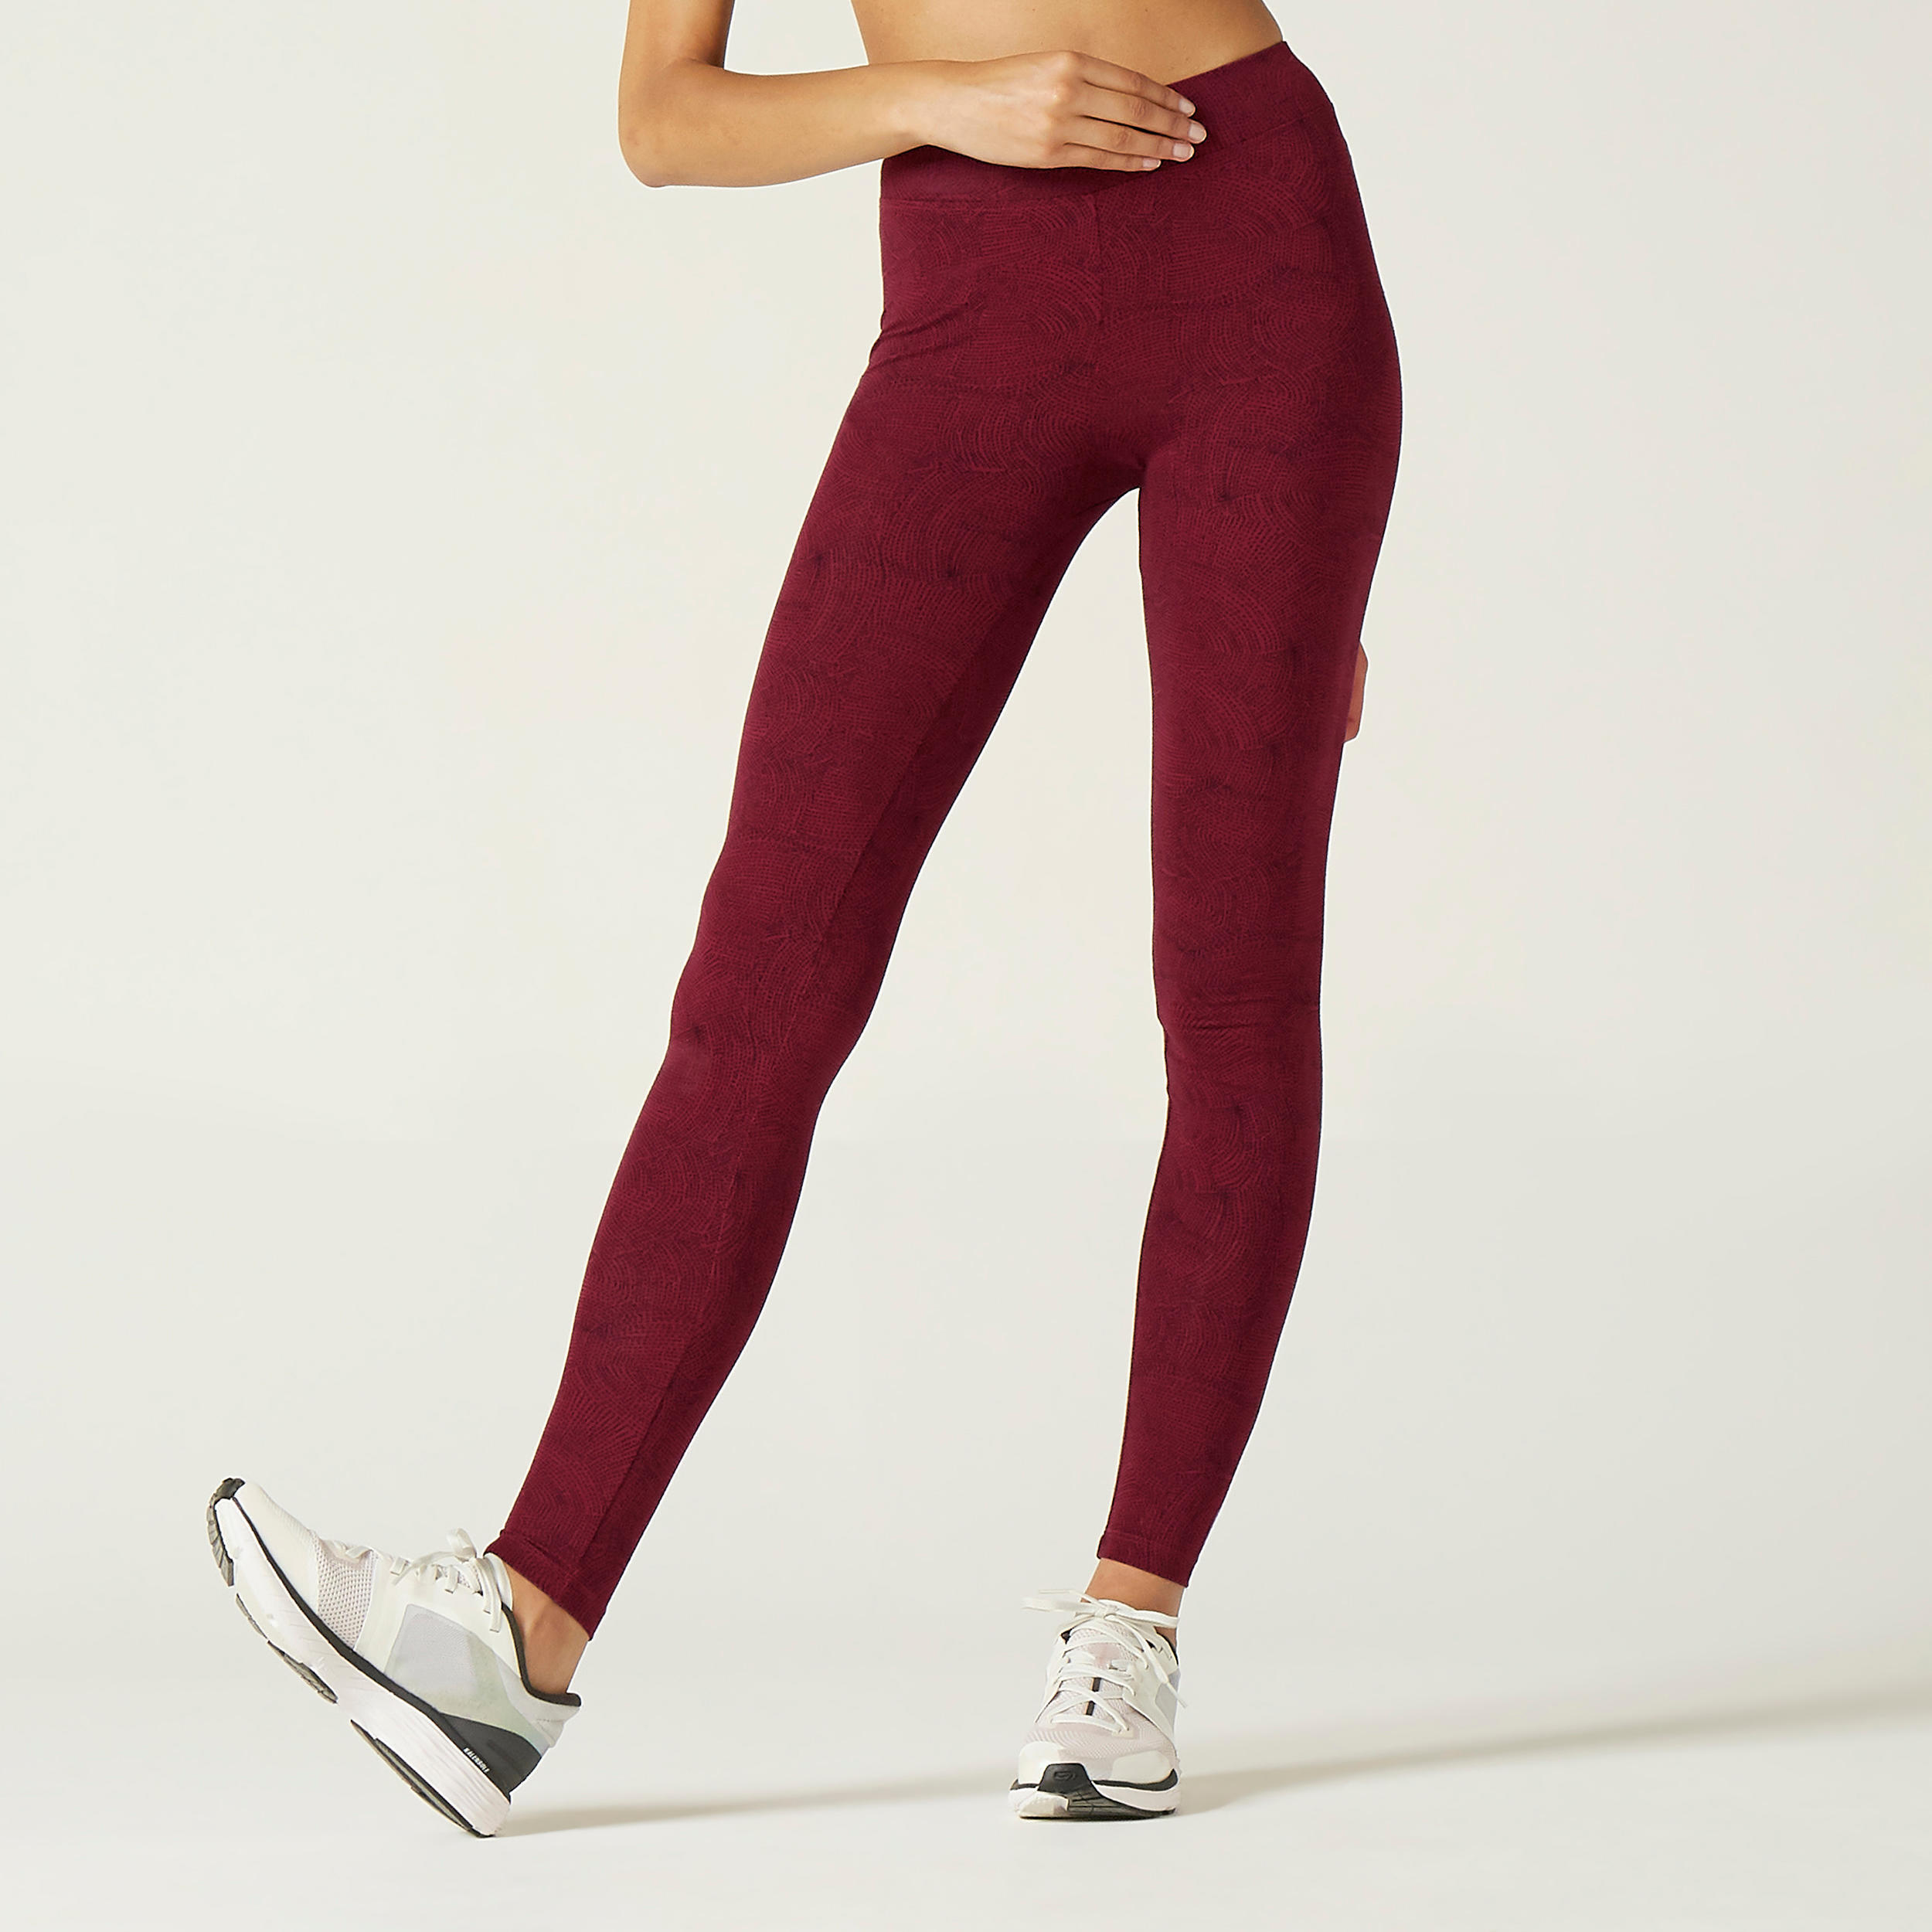 Women's Slim-Fit Fitness Leggings Fit+ 500 - Burgundy Print 4/8